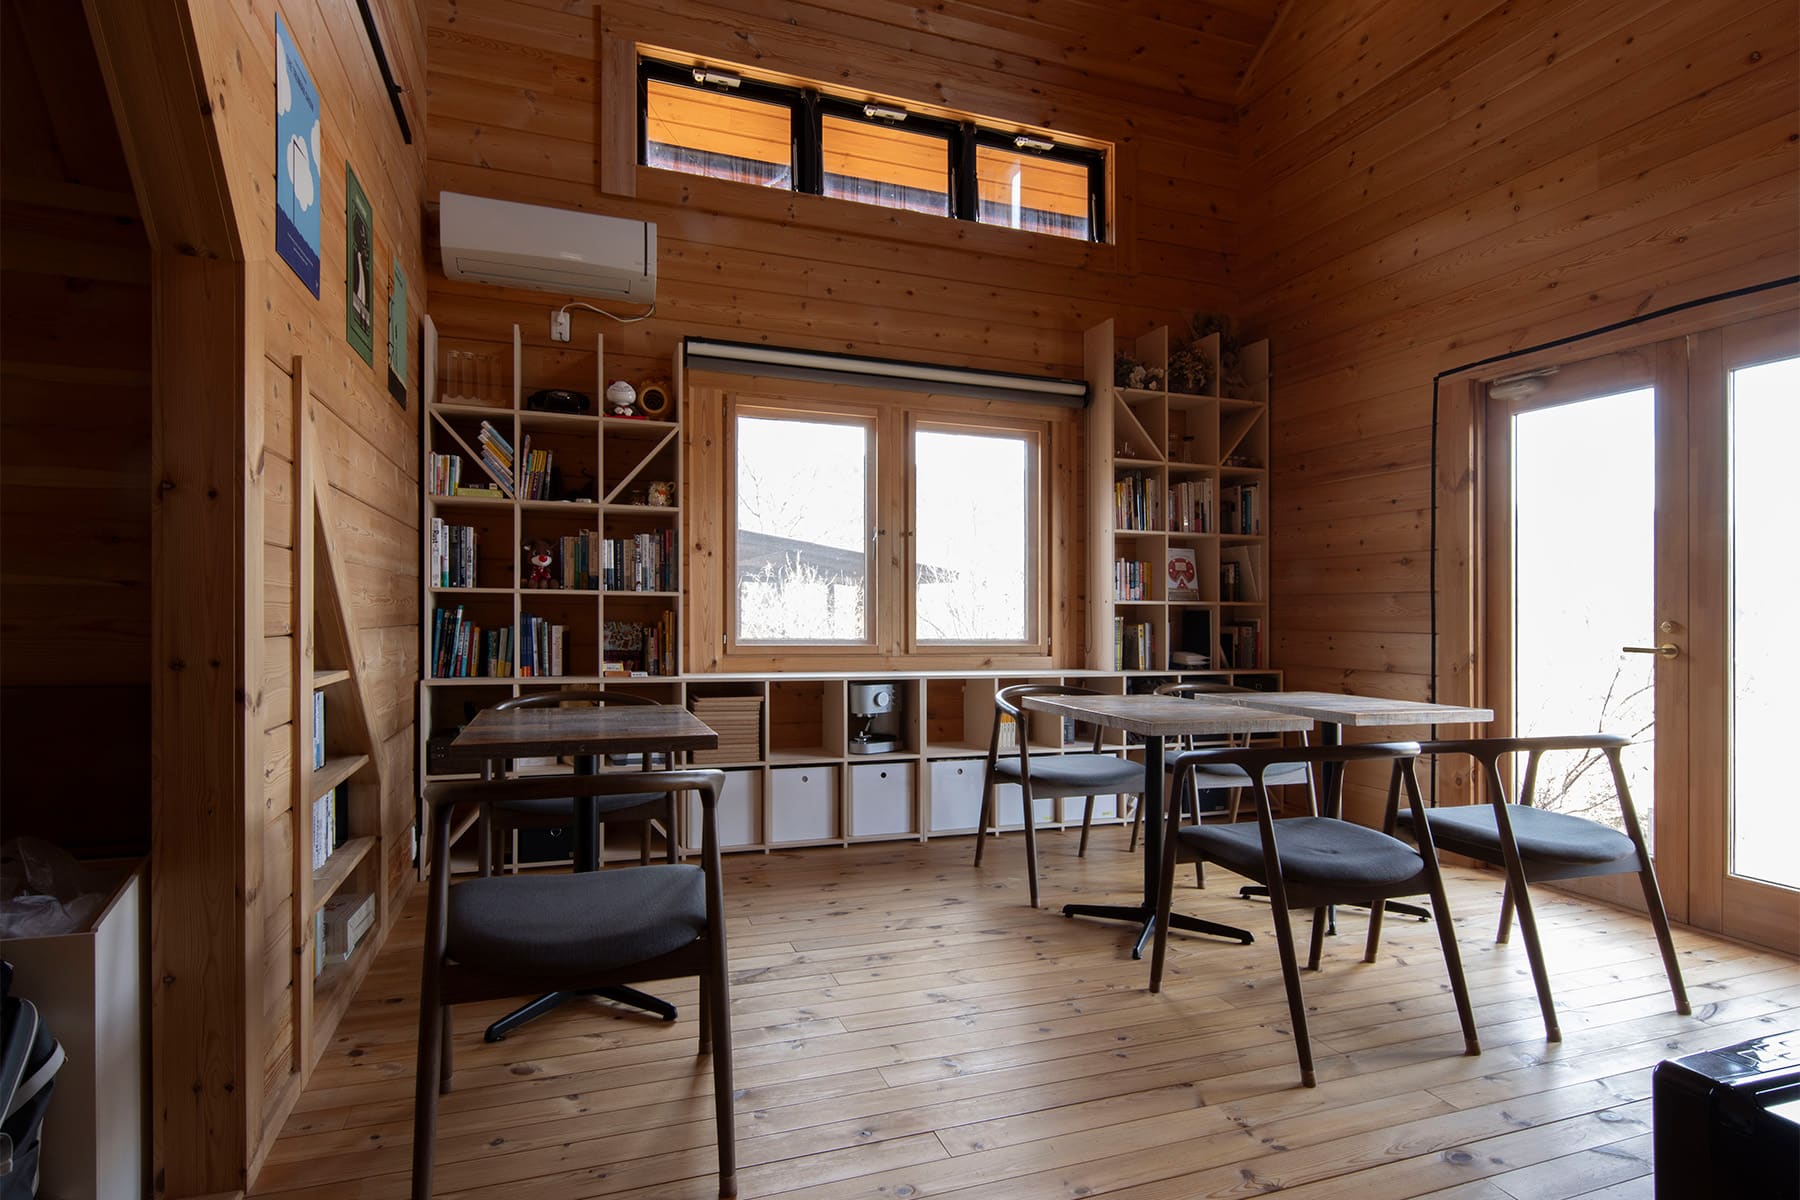 【File 813】ワタリドリのカフェ - Shelf 壁一面の本棚 - マルゲリータお客様事例